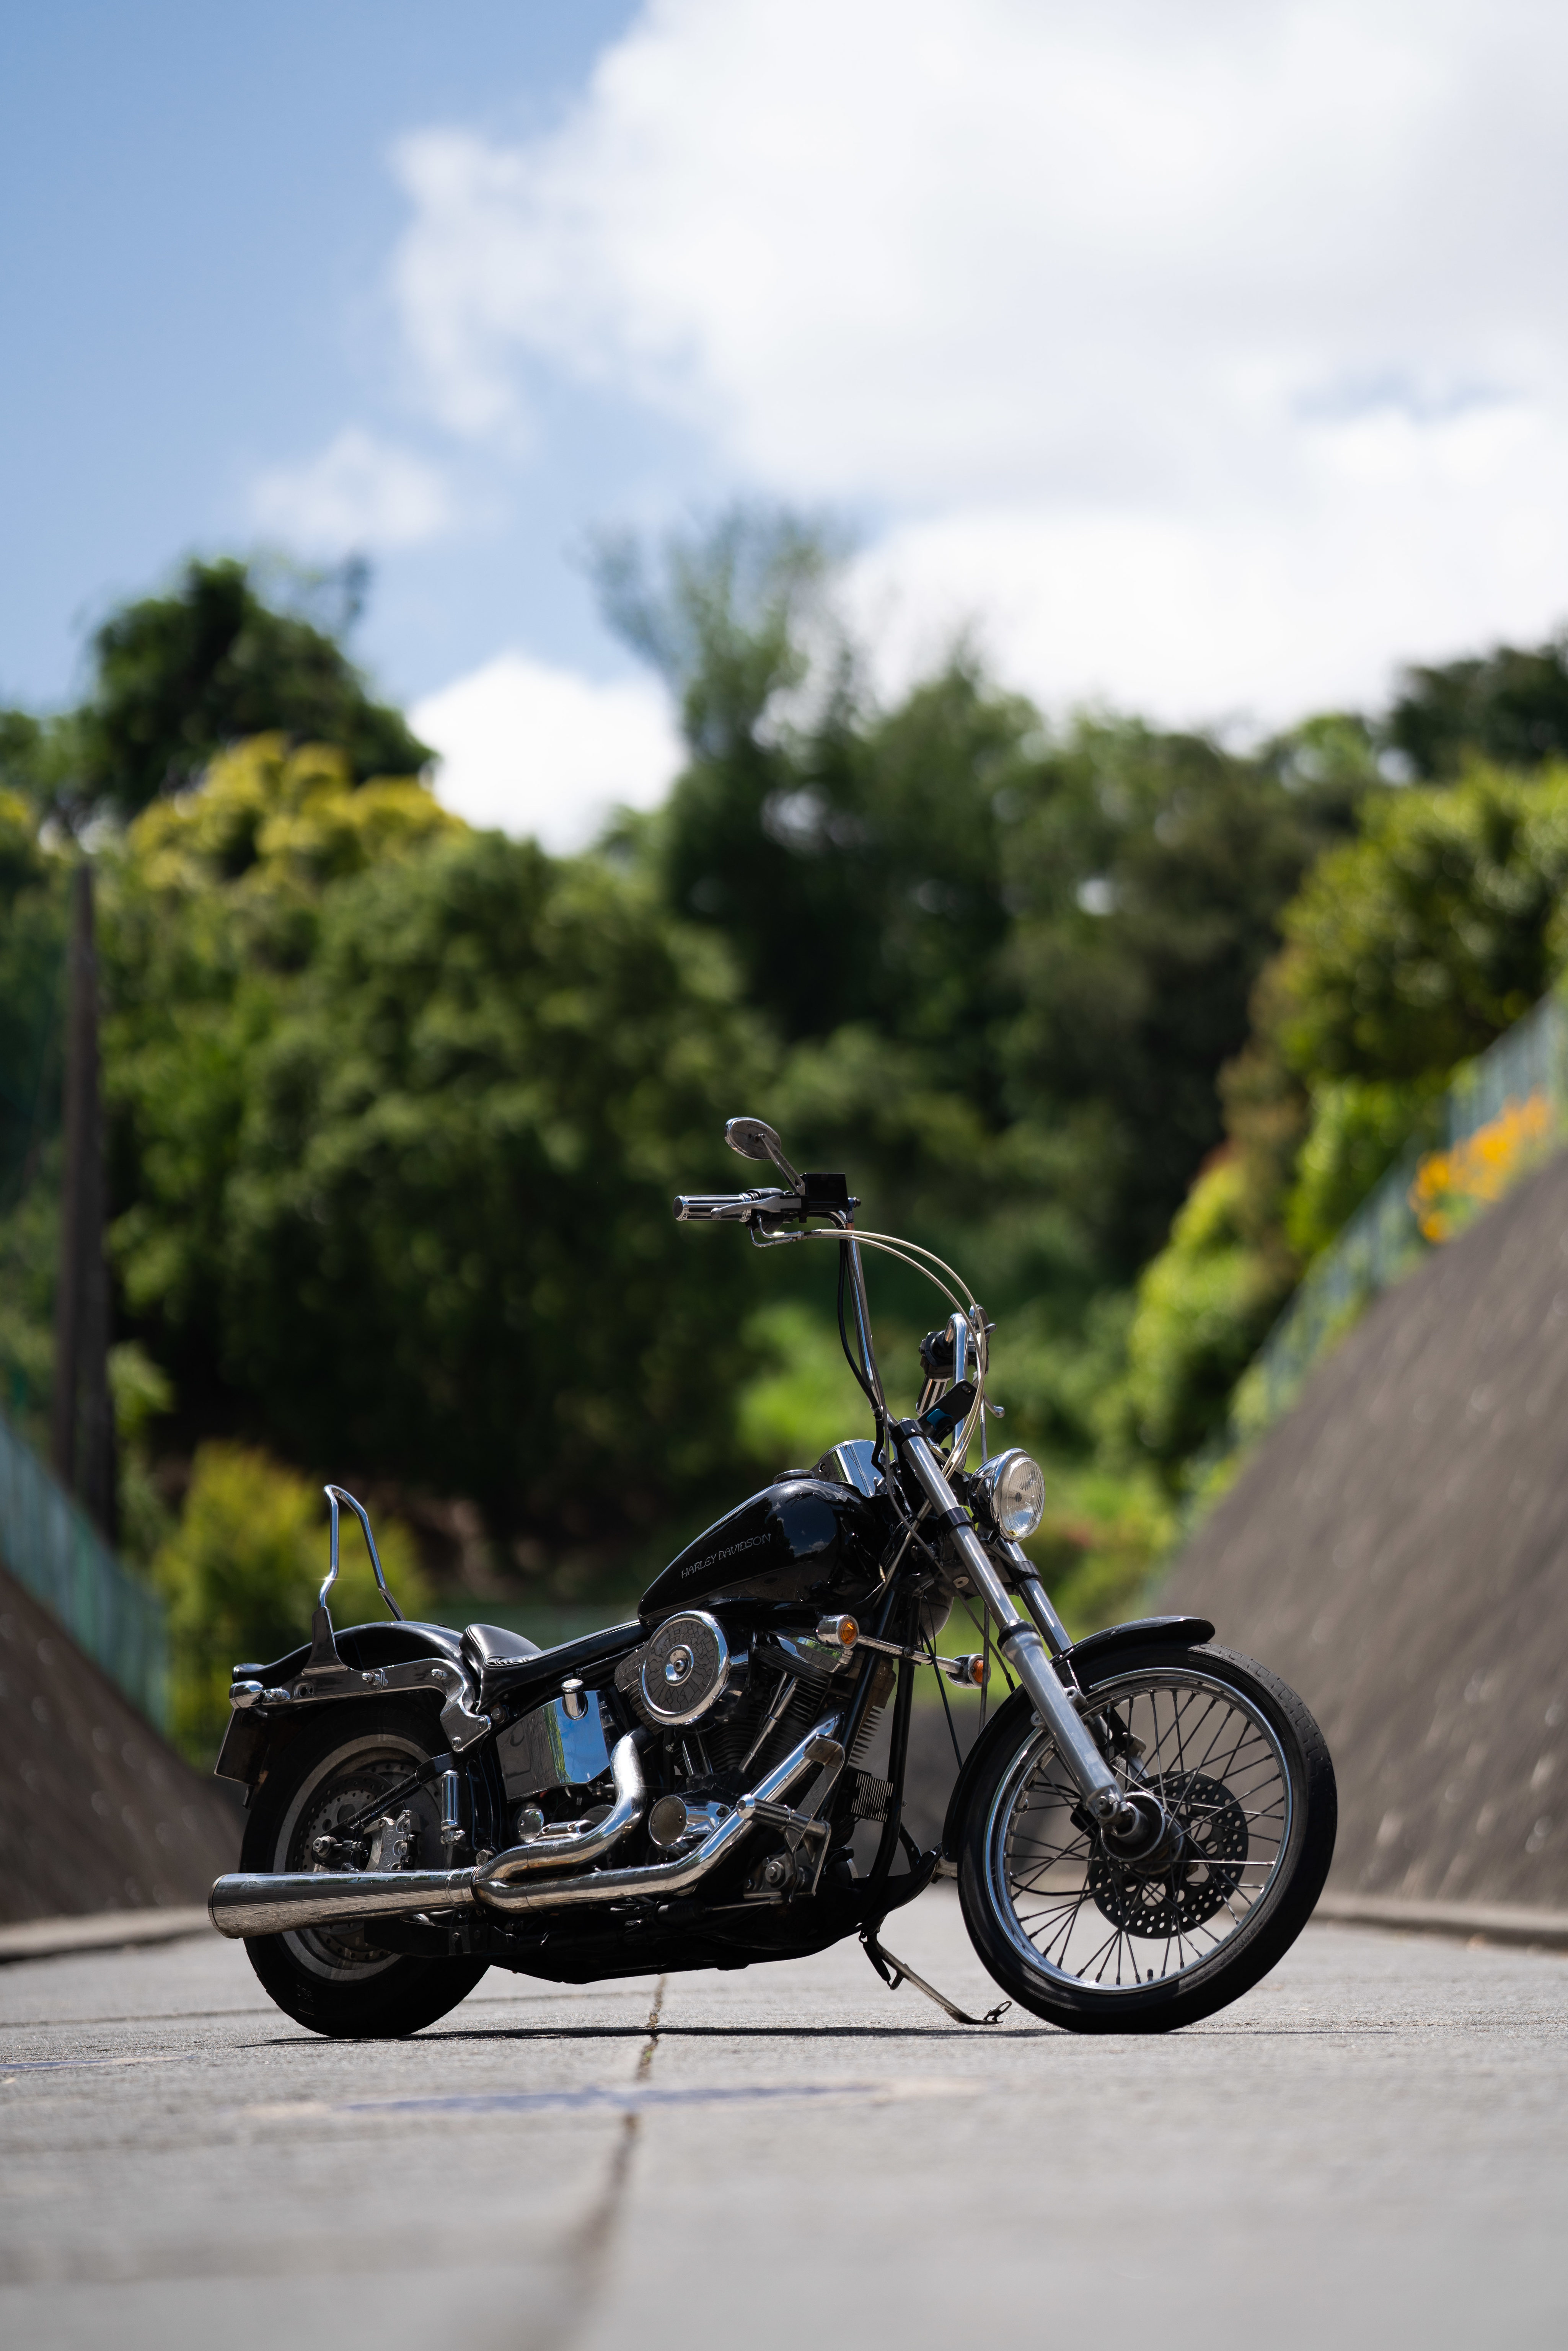 harley davidson, bike, motorcycles, side view, motorcycle lock screen backgrounds